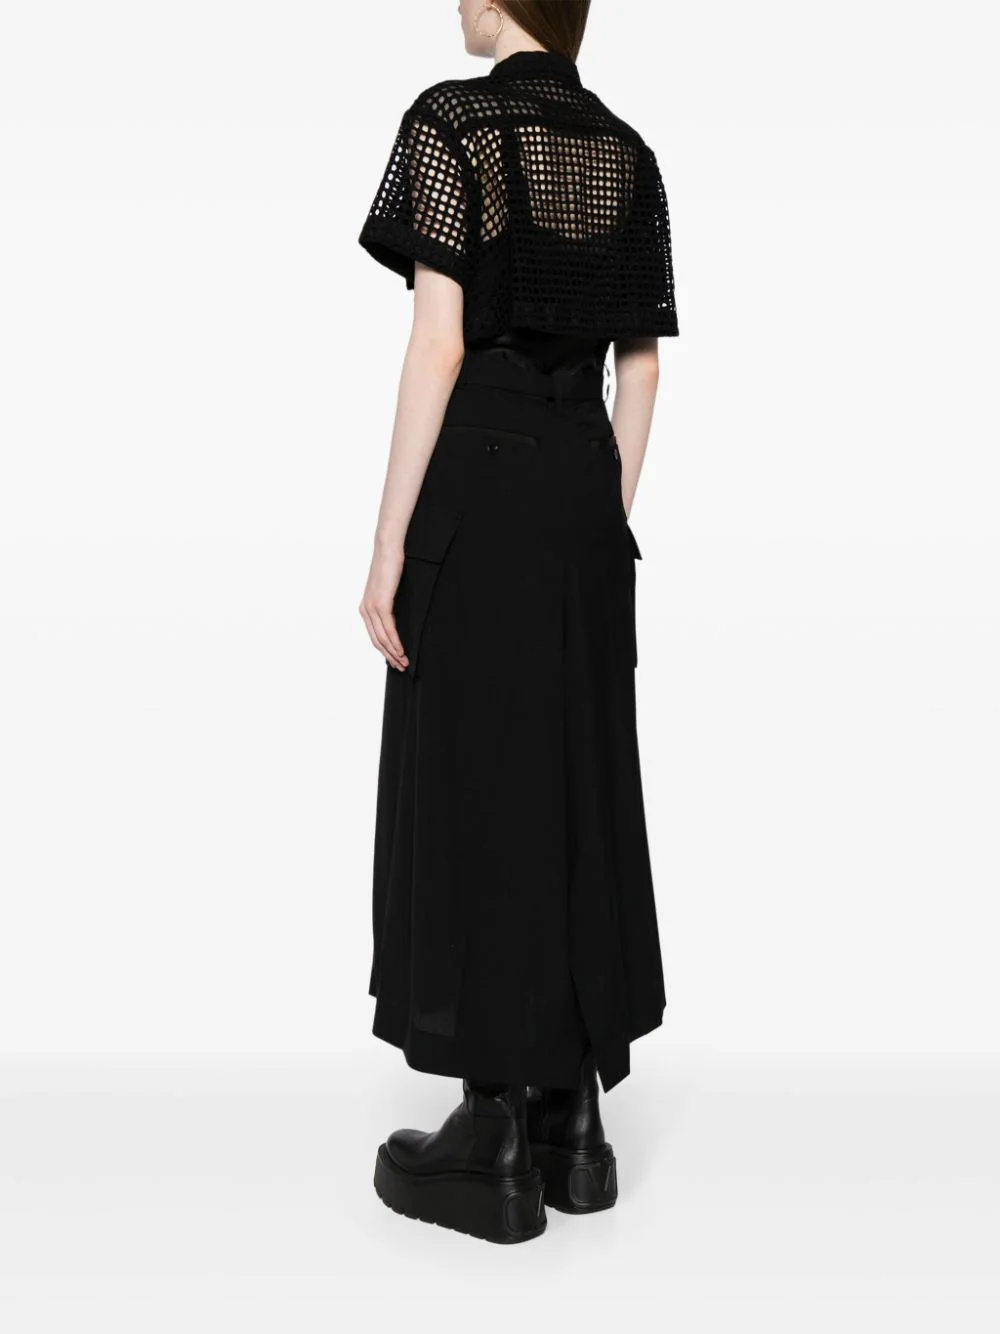 sacai-Embroidery-Lace-Dress-Black-4